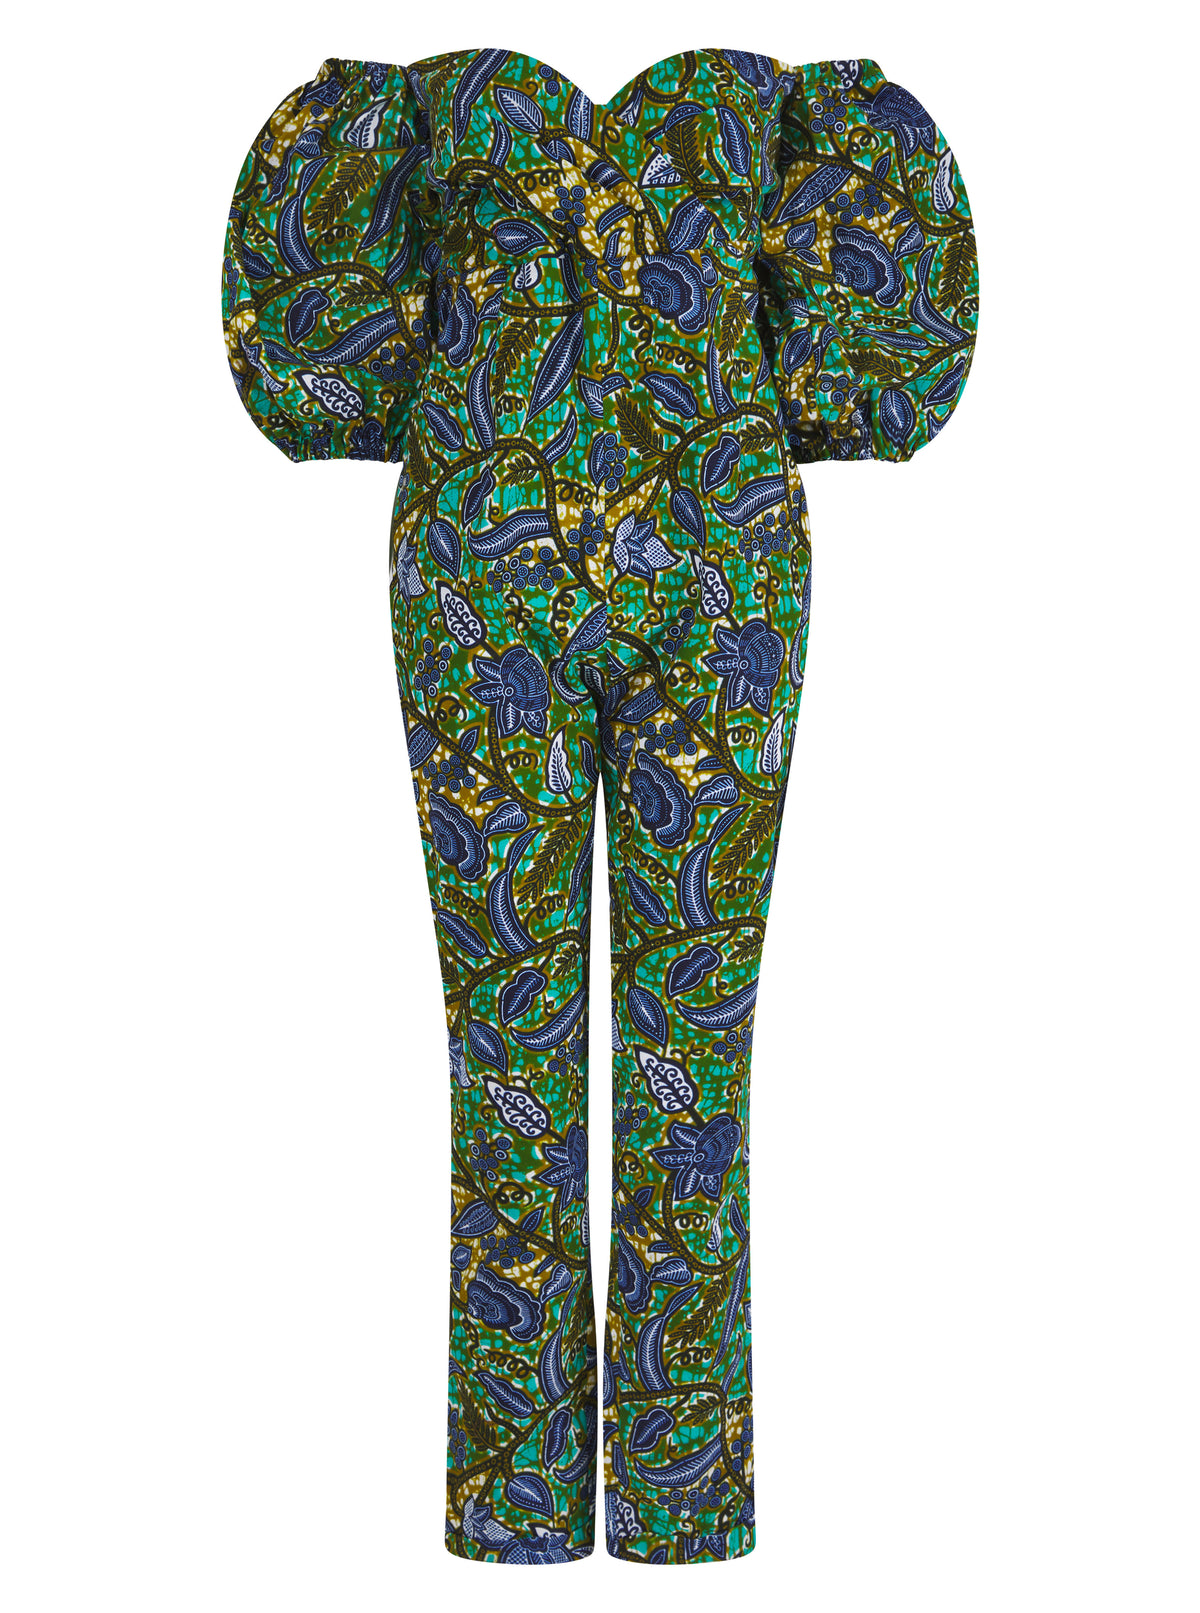 Natalie Luxe Big Sleeve African Print Jumpsuit